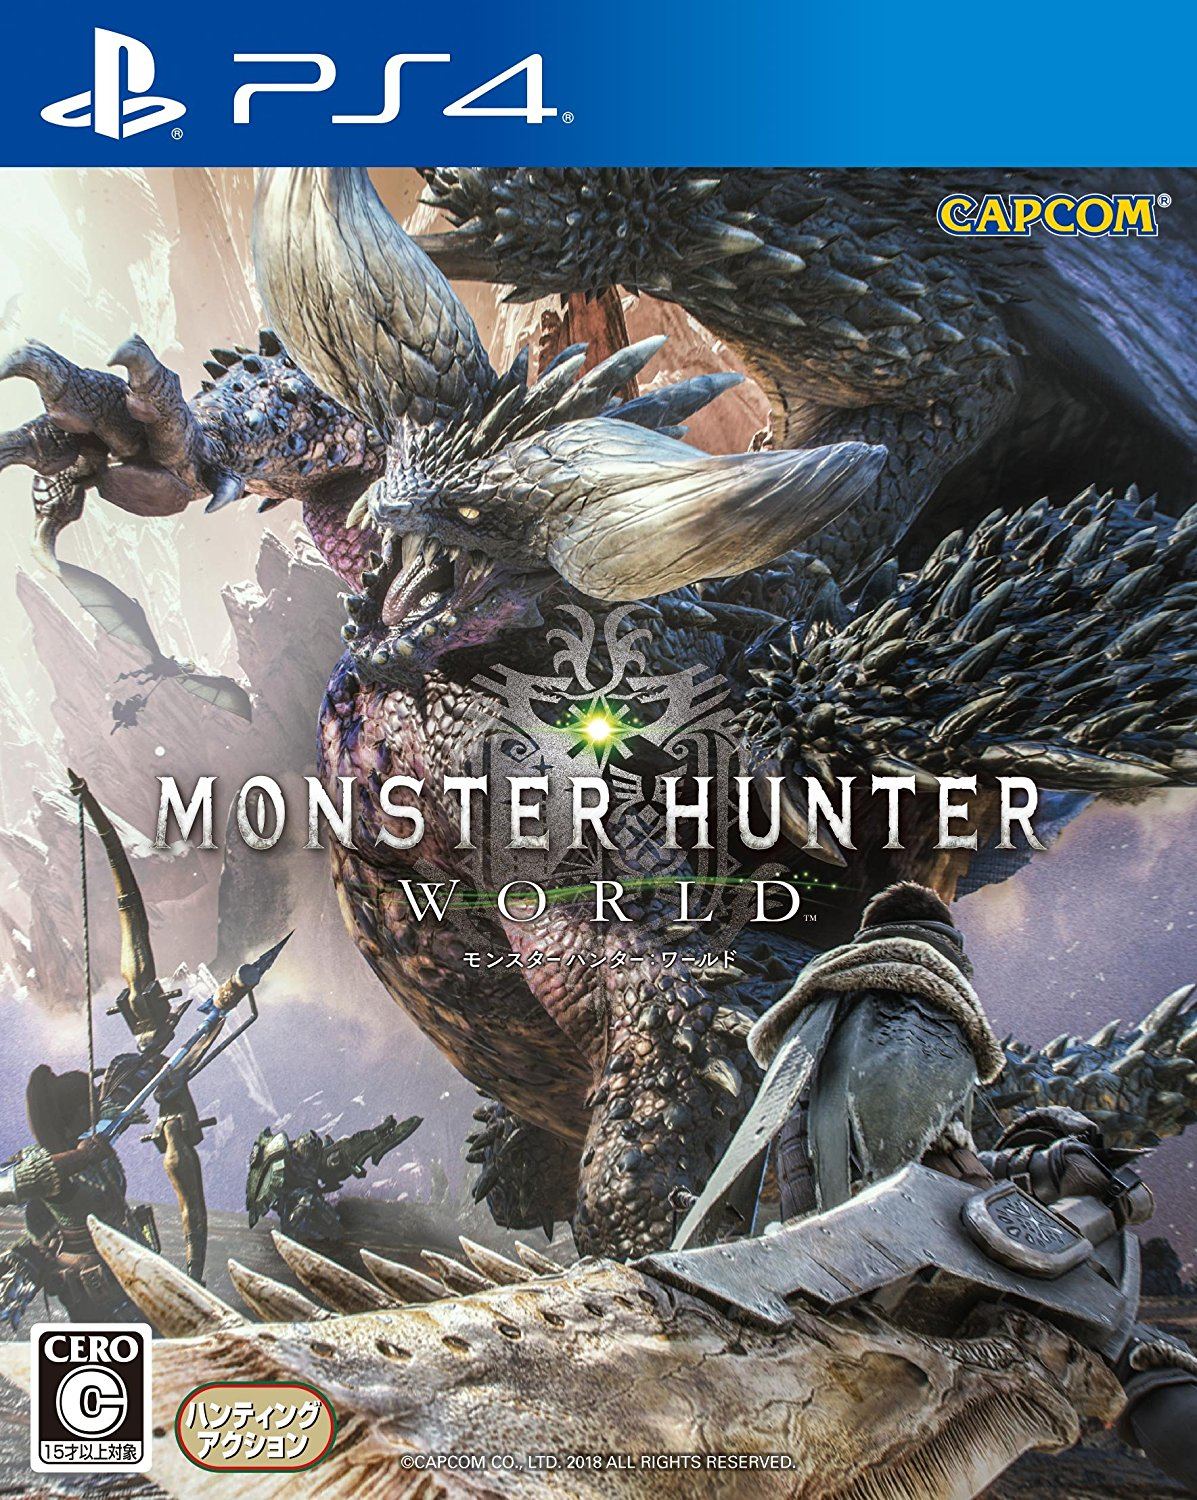 Monster Hunter: World for PlayStation 4